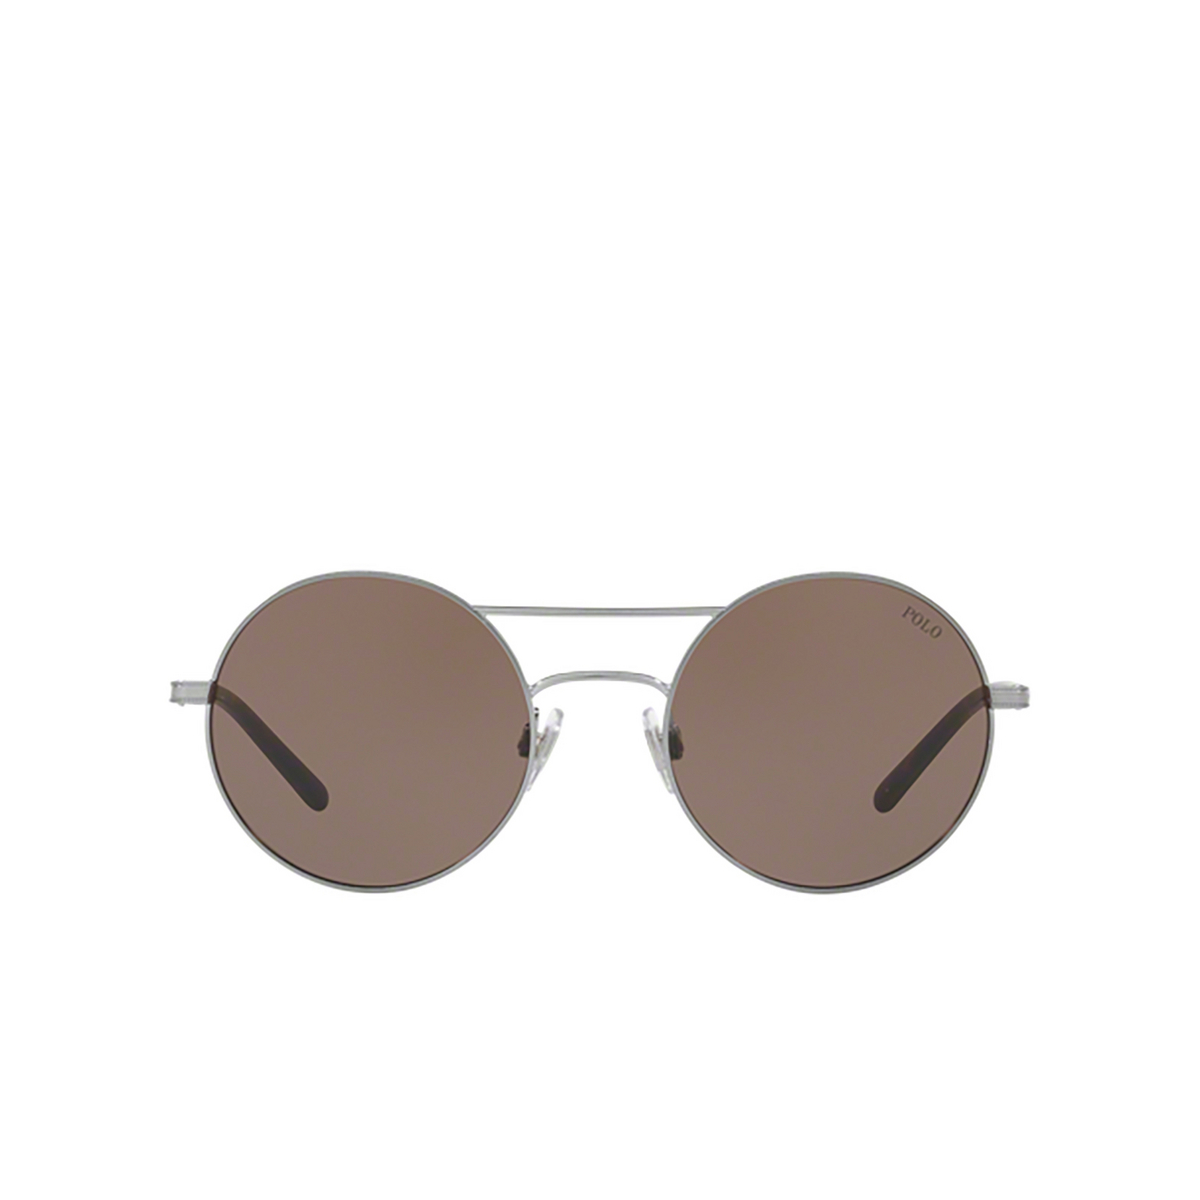 Polo Ralph Lauren® Round Sunglasses: PH3108 color 932873 - front view.